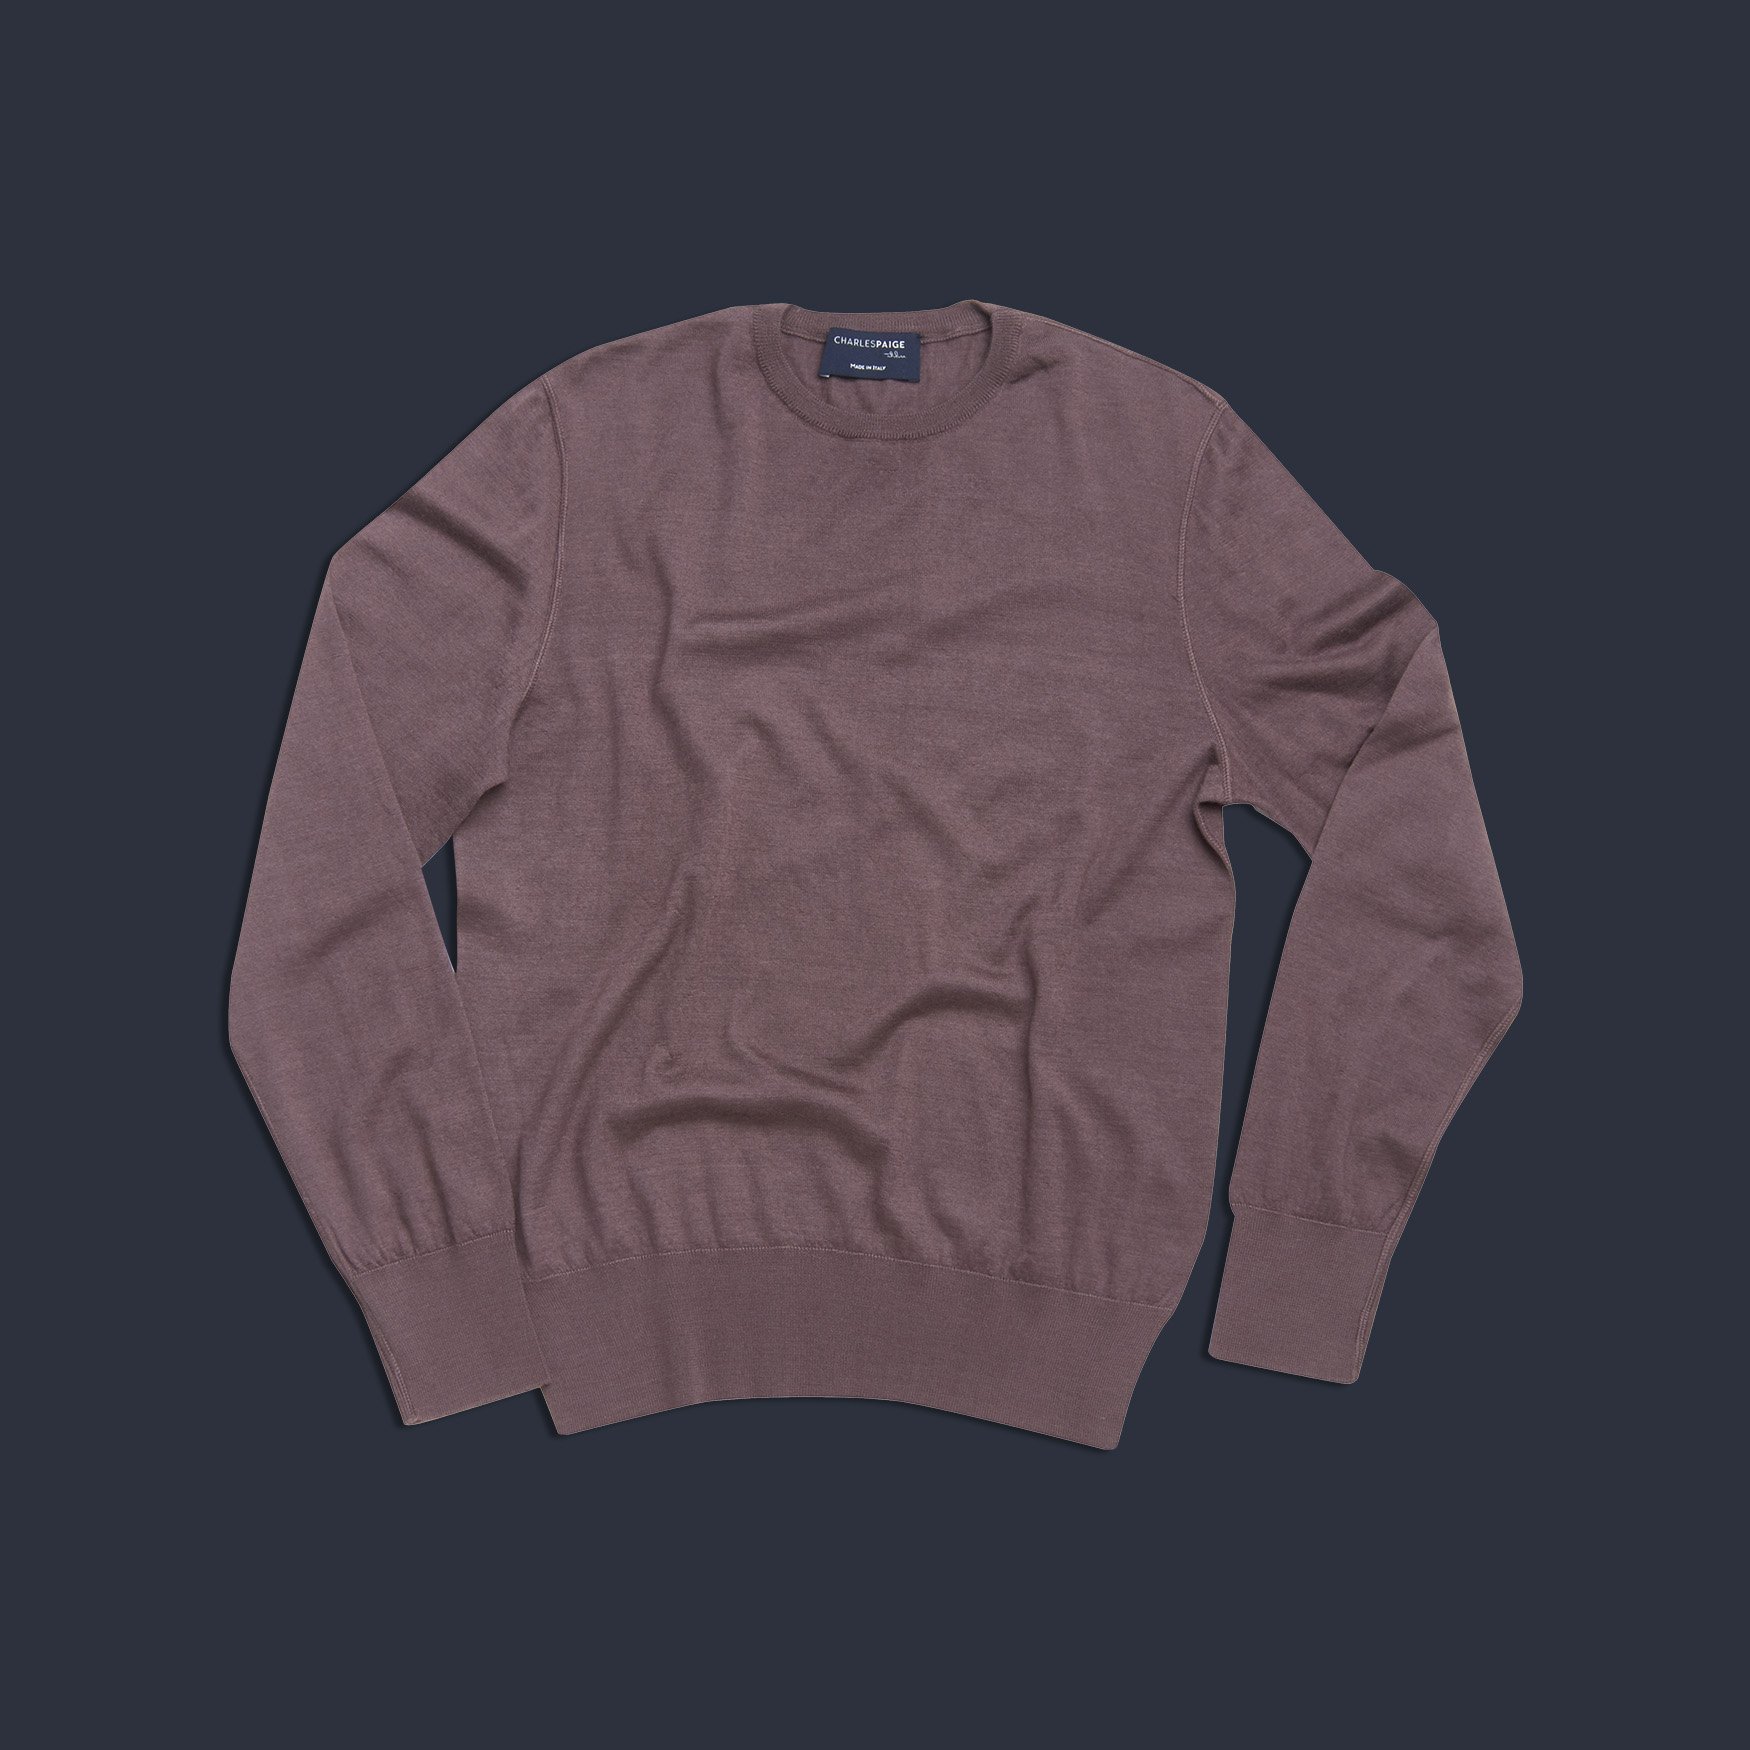 Burgundy crewneck sweater.jpg